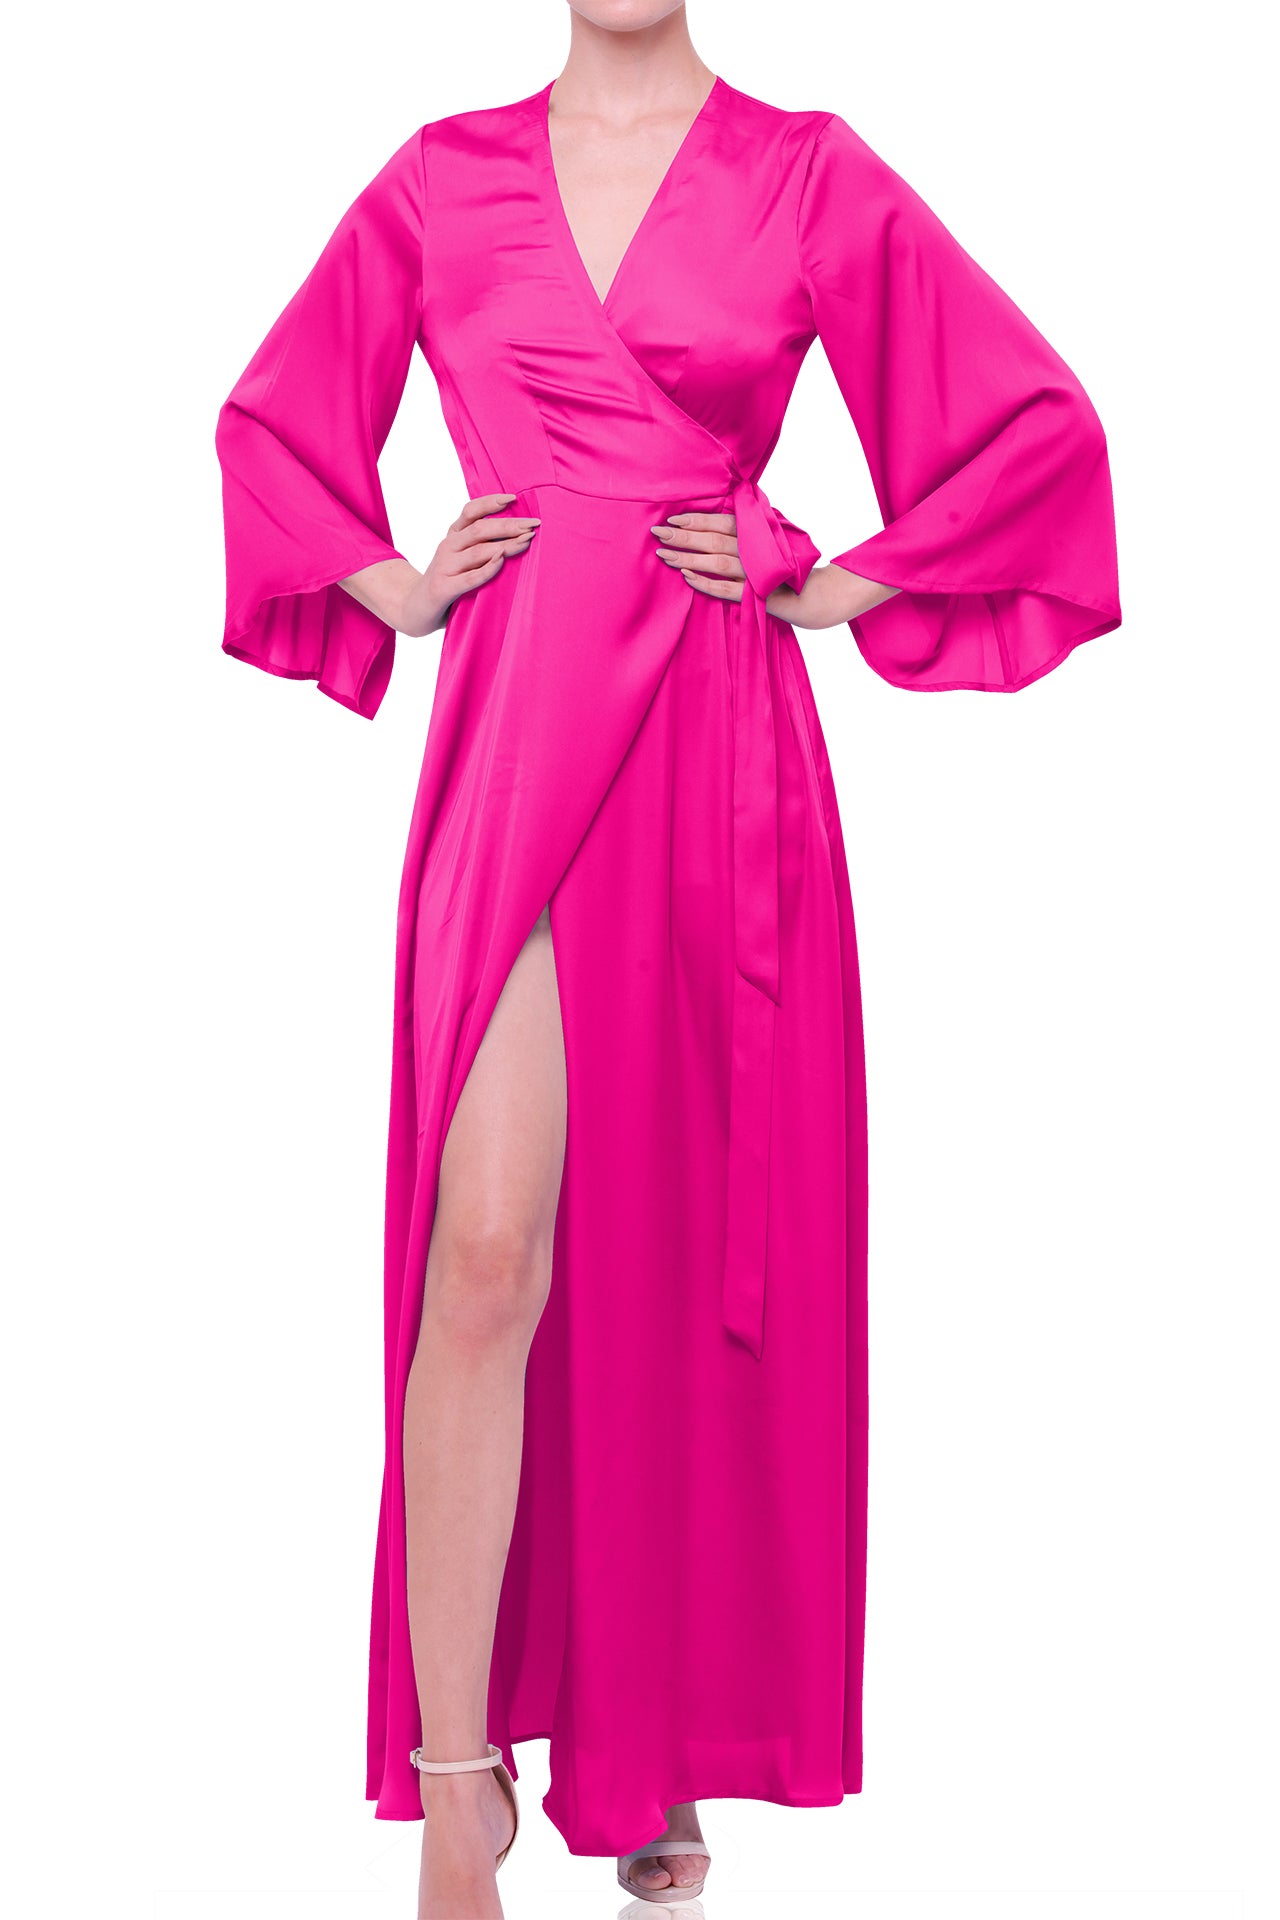 Designer Long Wrap Dress in Solid Fuchsia Fedora